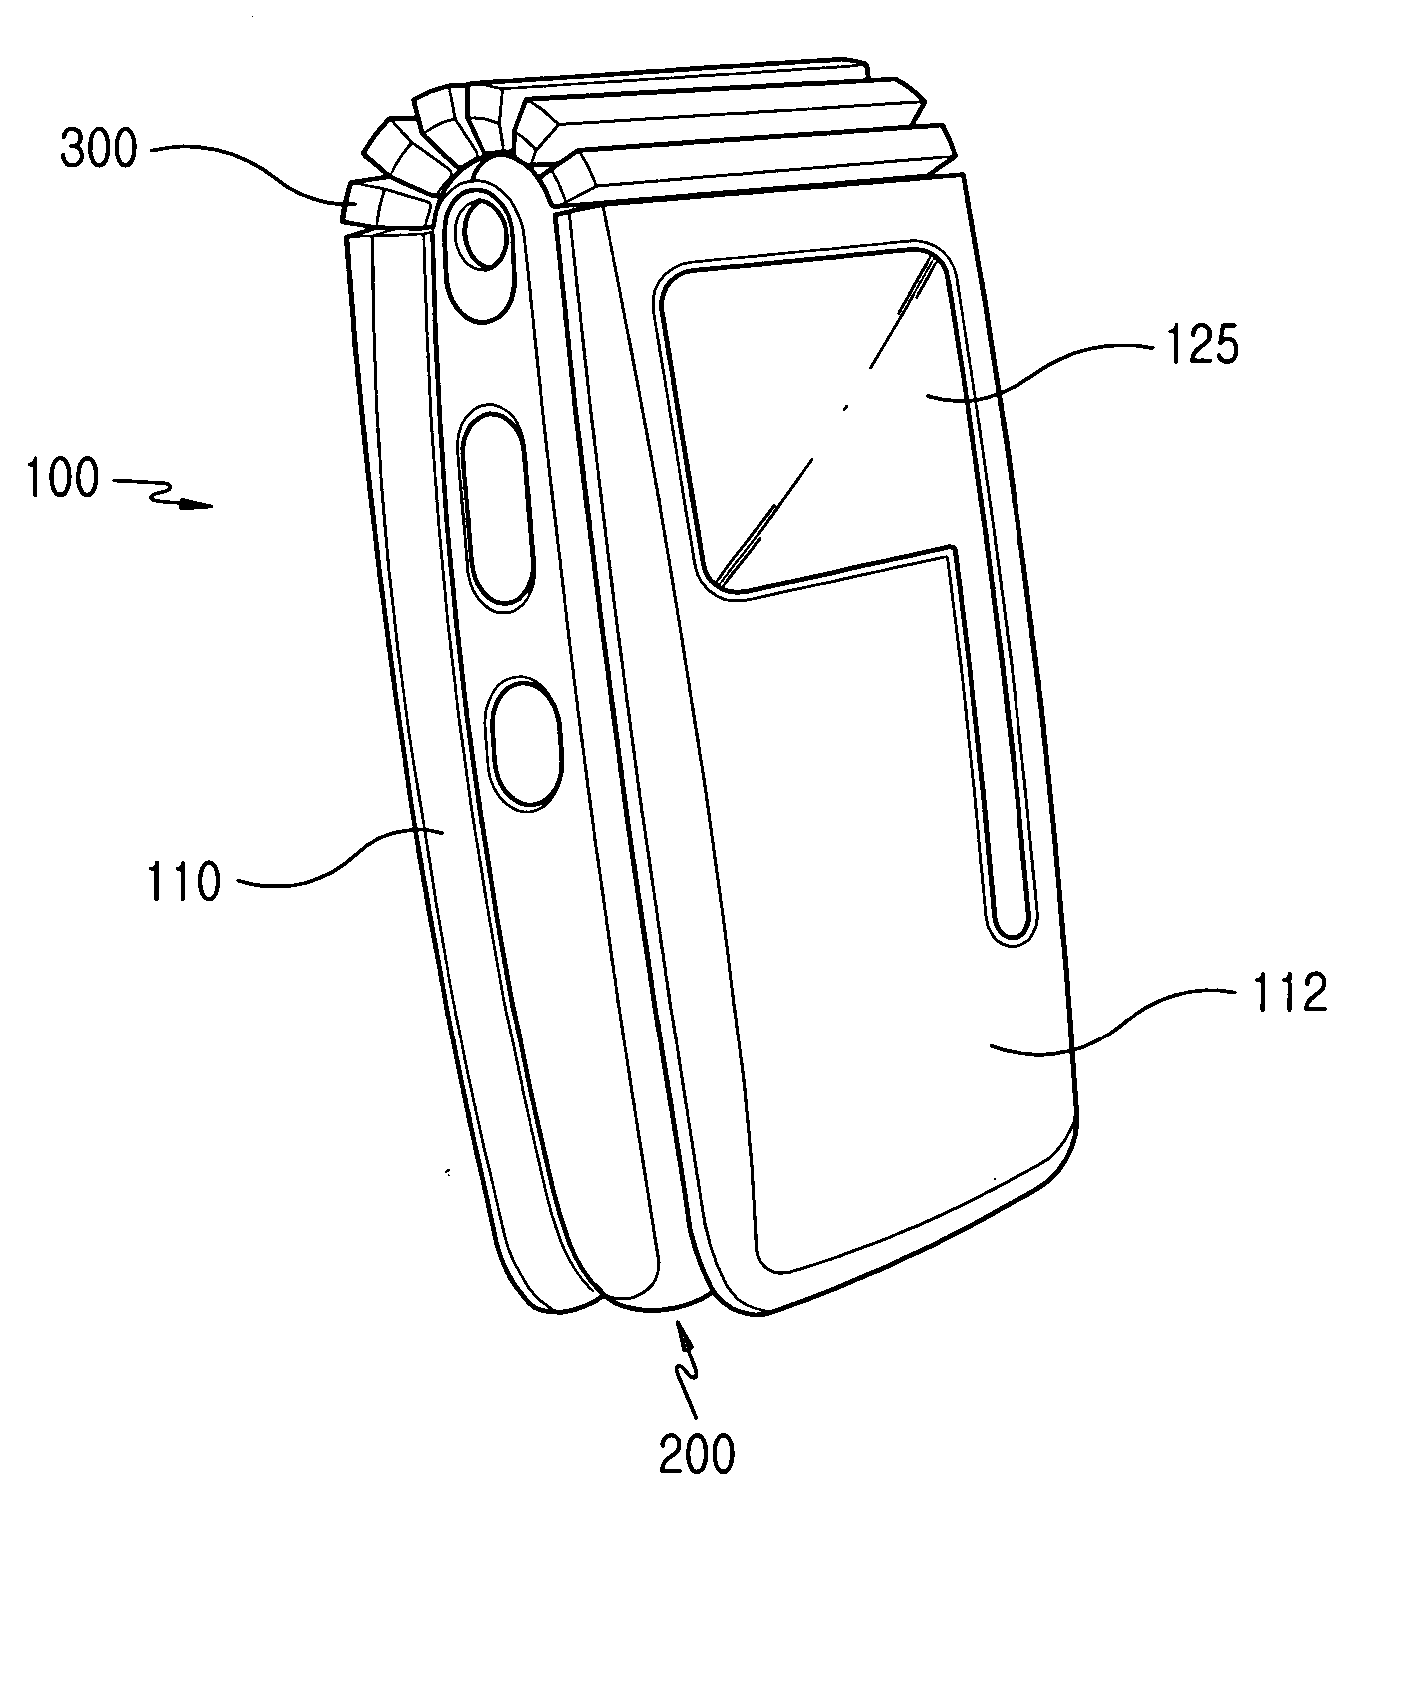 Sliding-folding type portable communication apparatus